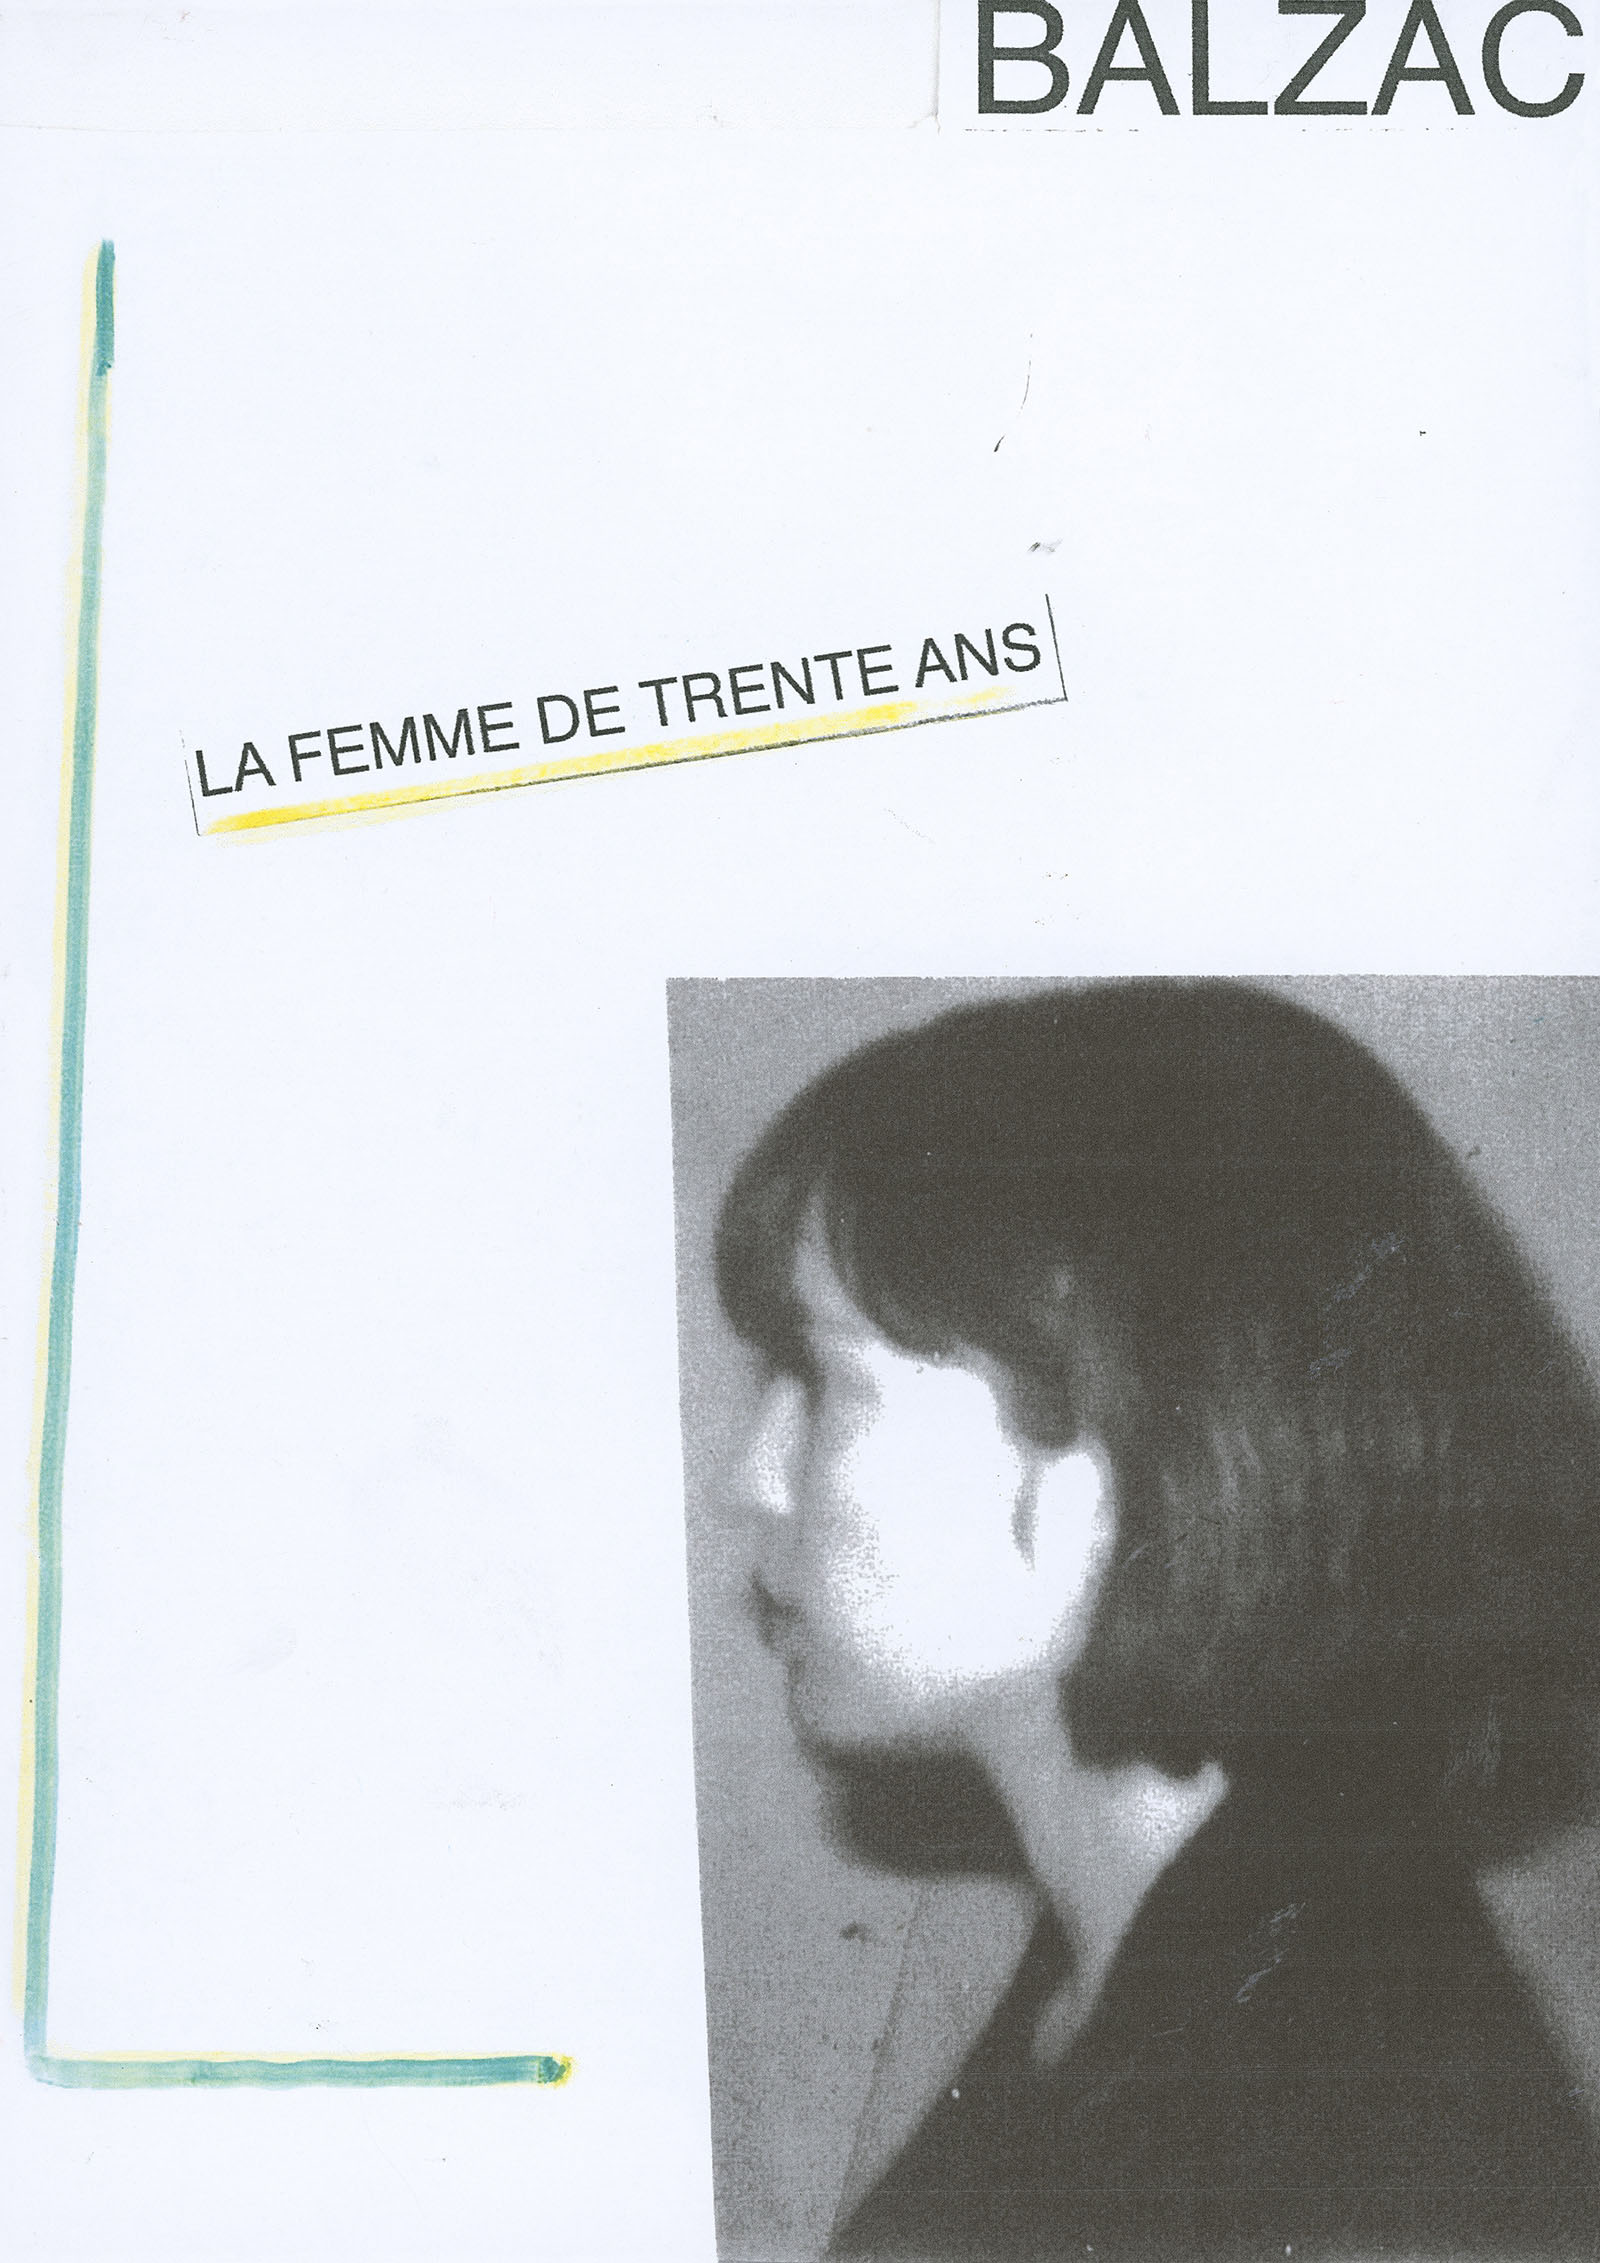 Balzac - La femme de trente ans, 2021